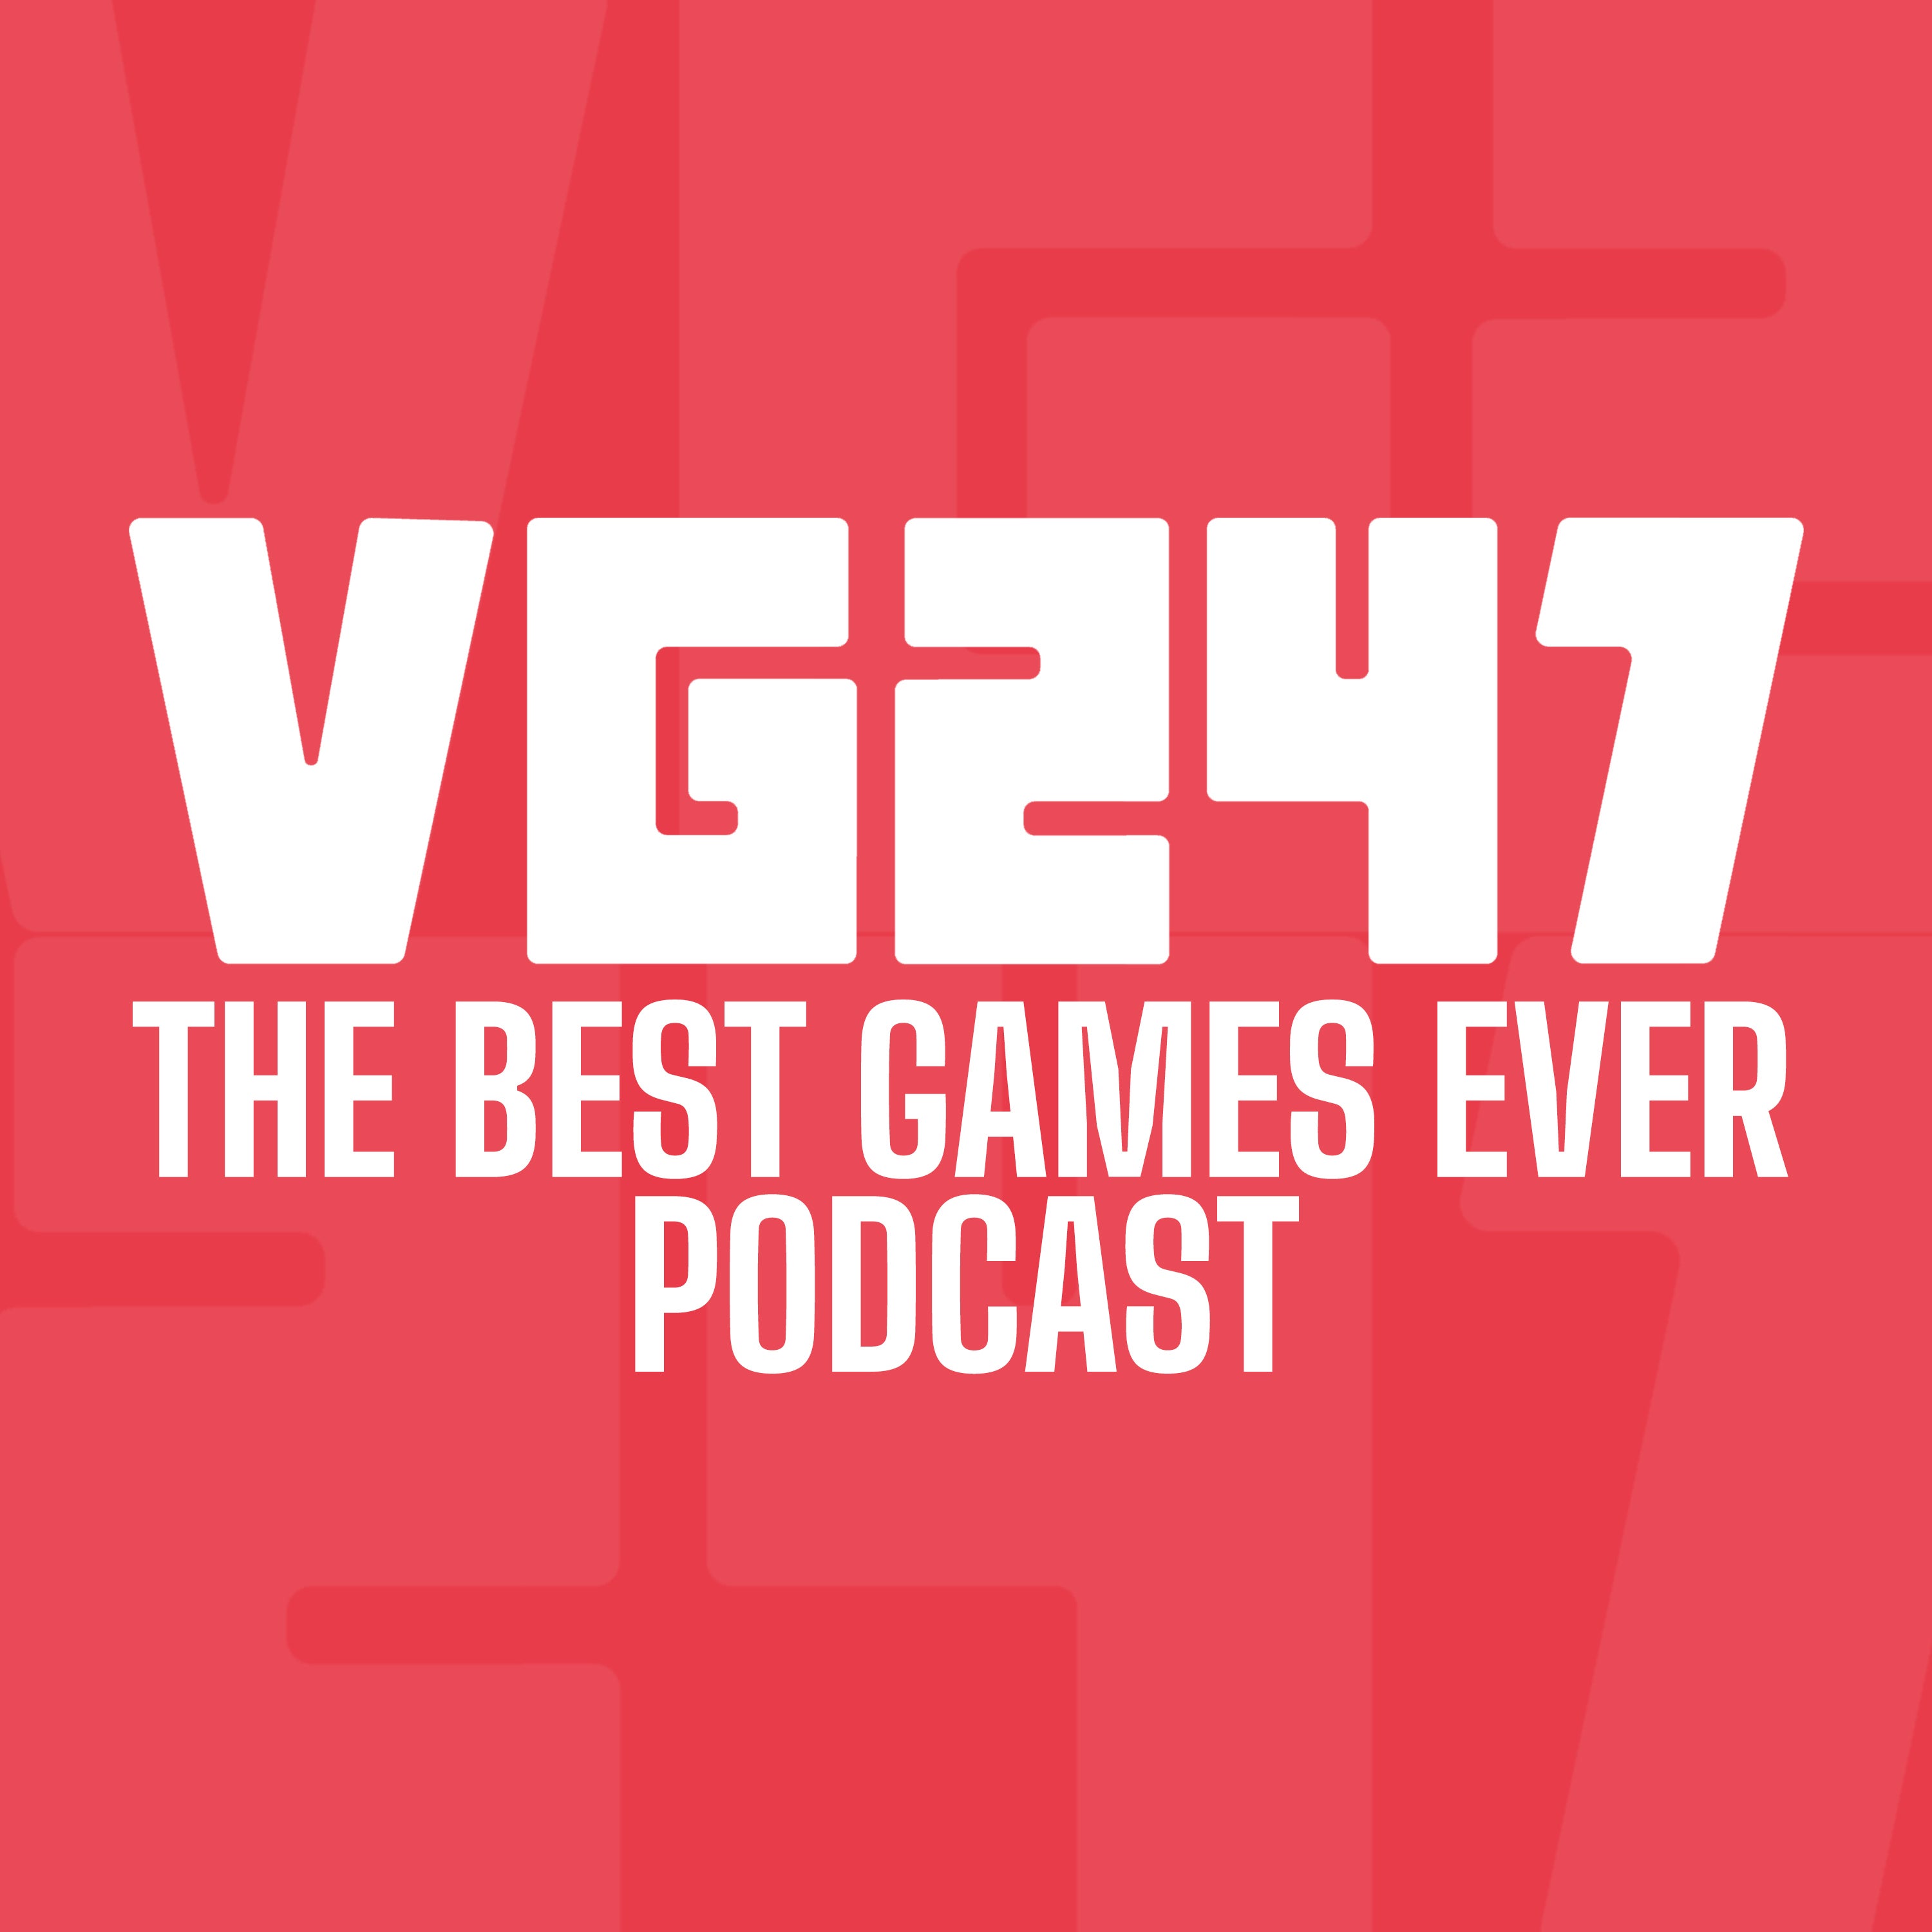 Logo voor VG247's Best Games Ever Podcast.  Witte tekst op rode achtergrond.